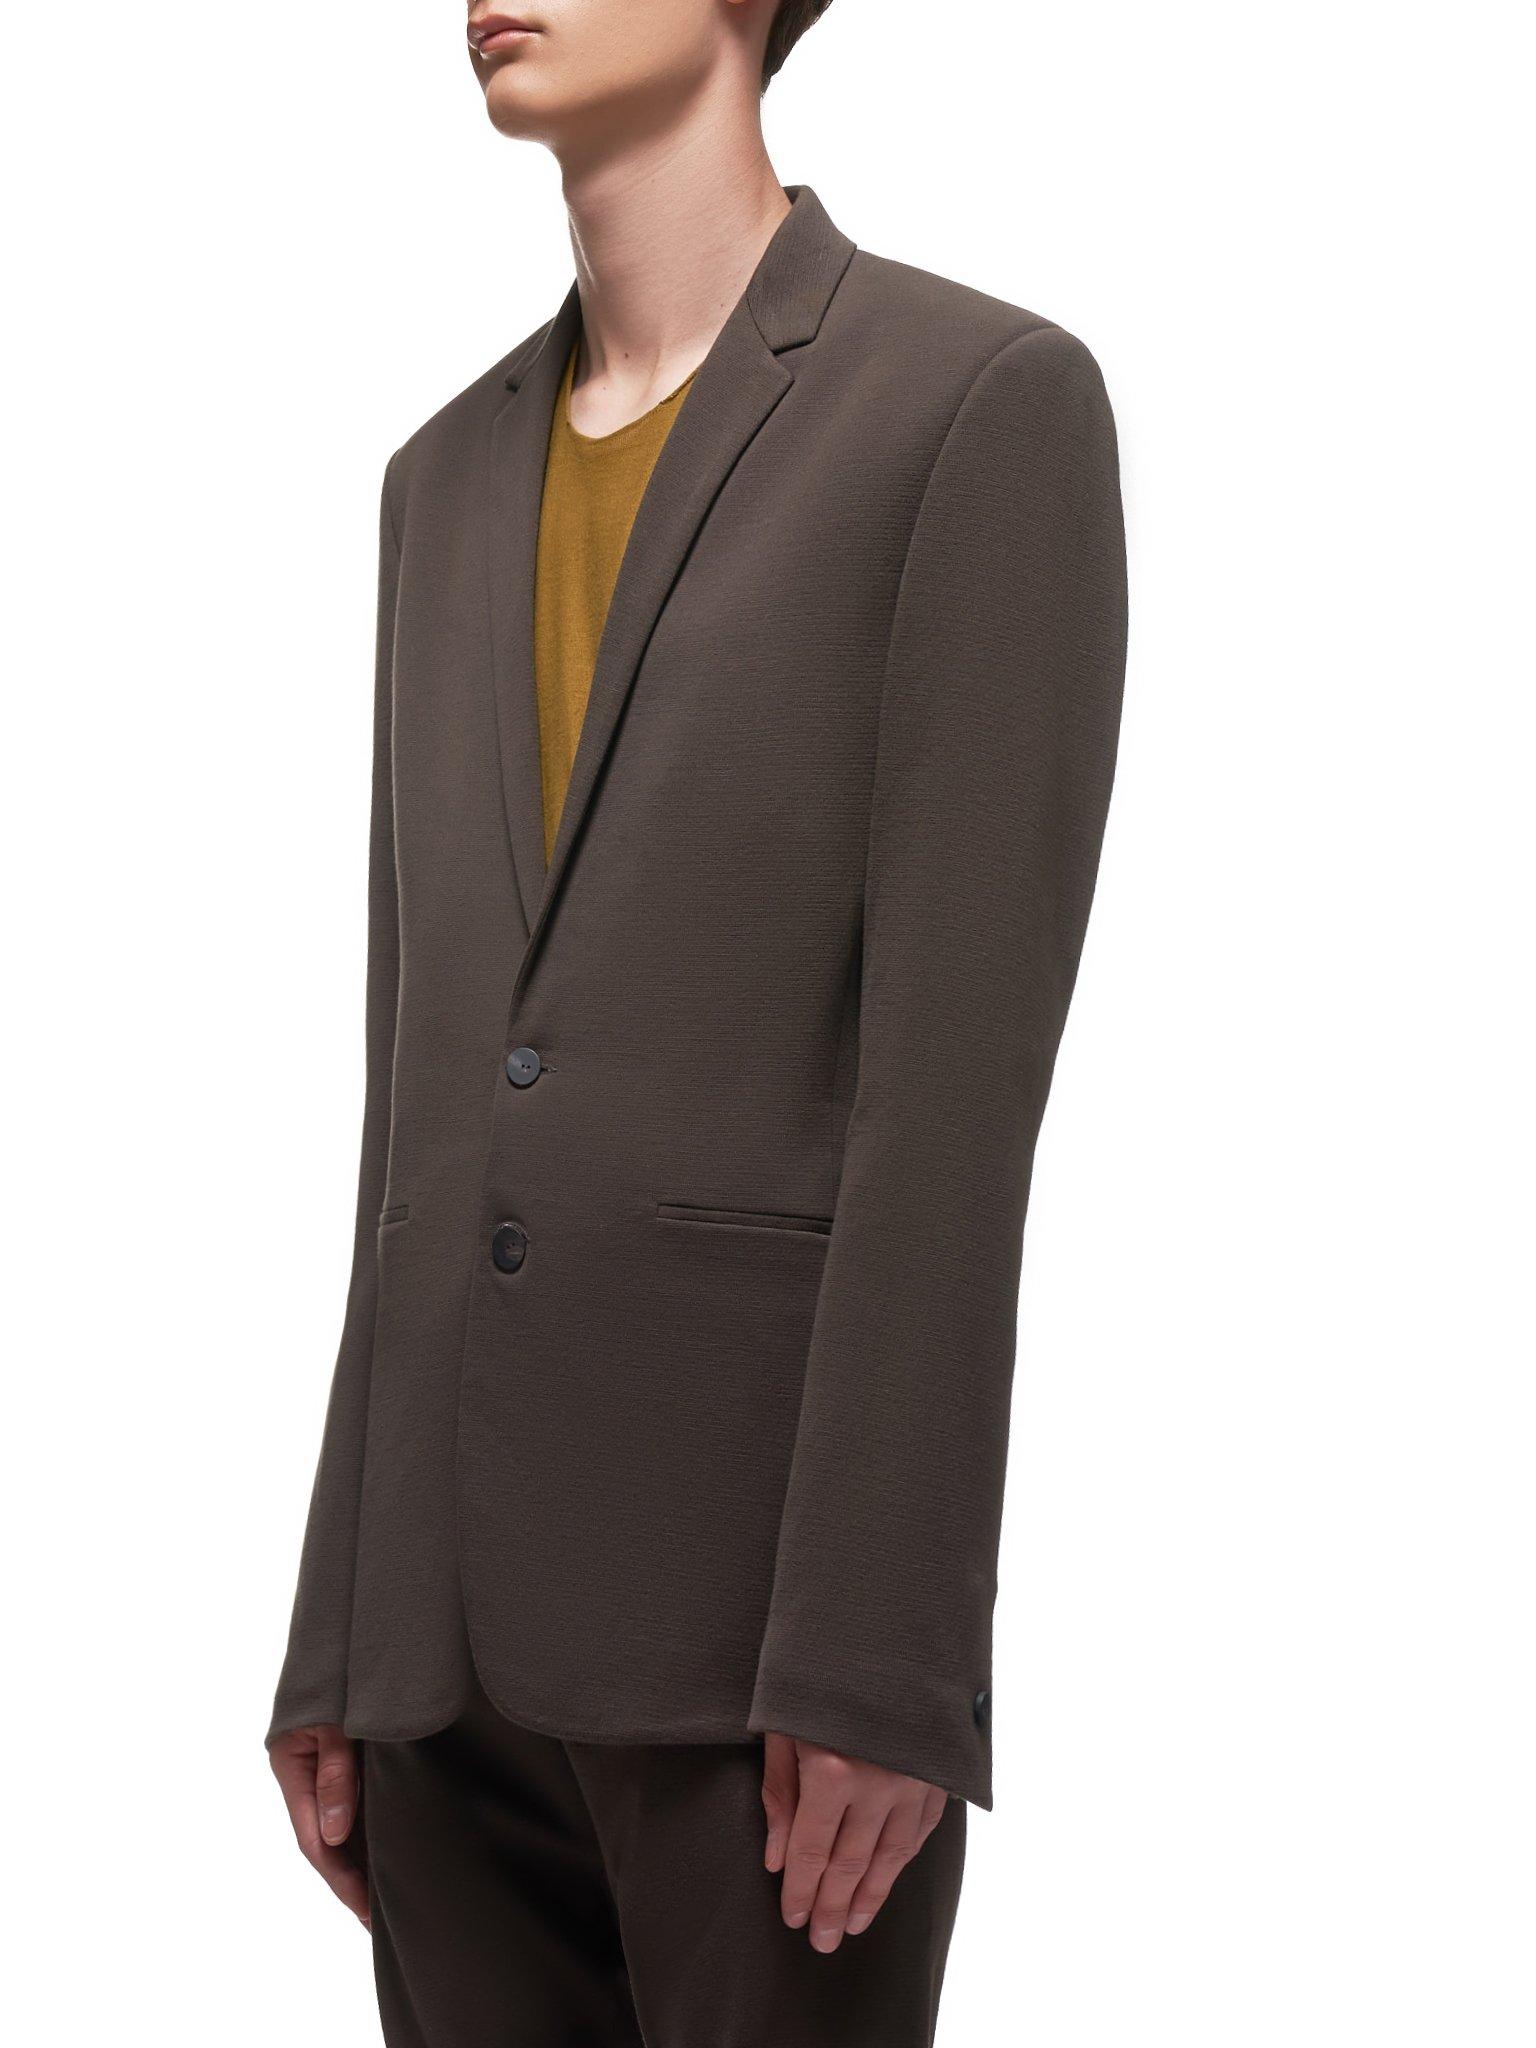 Label Under Construction Cotton Formal Jacket in Brown for Men - Lyst